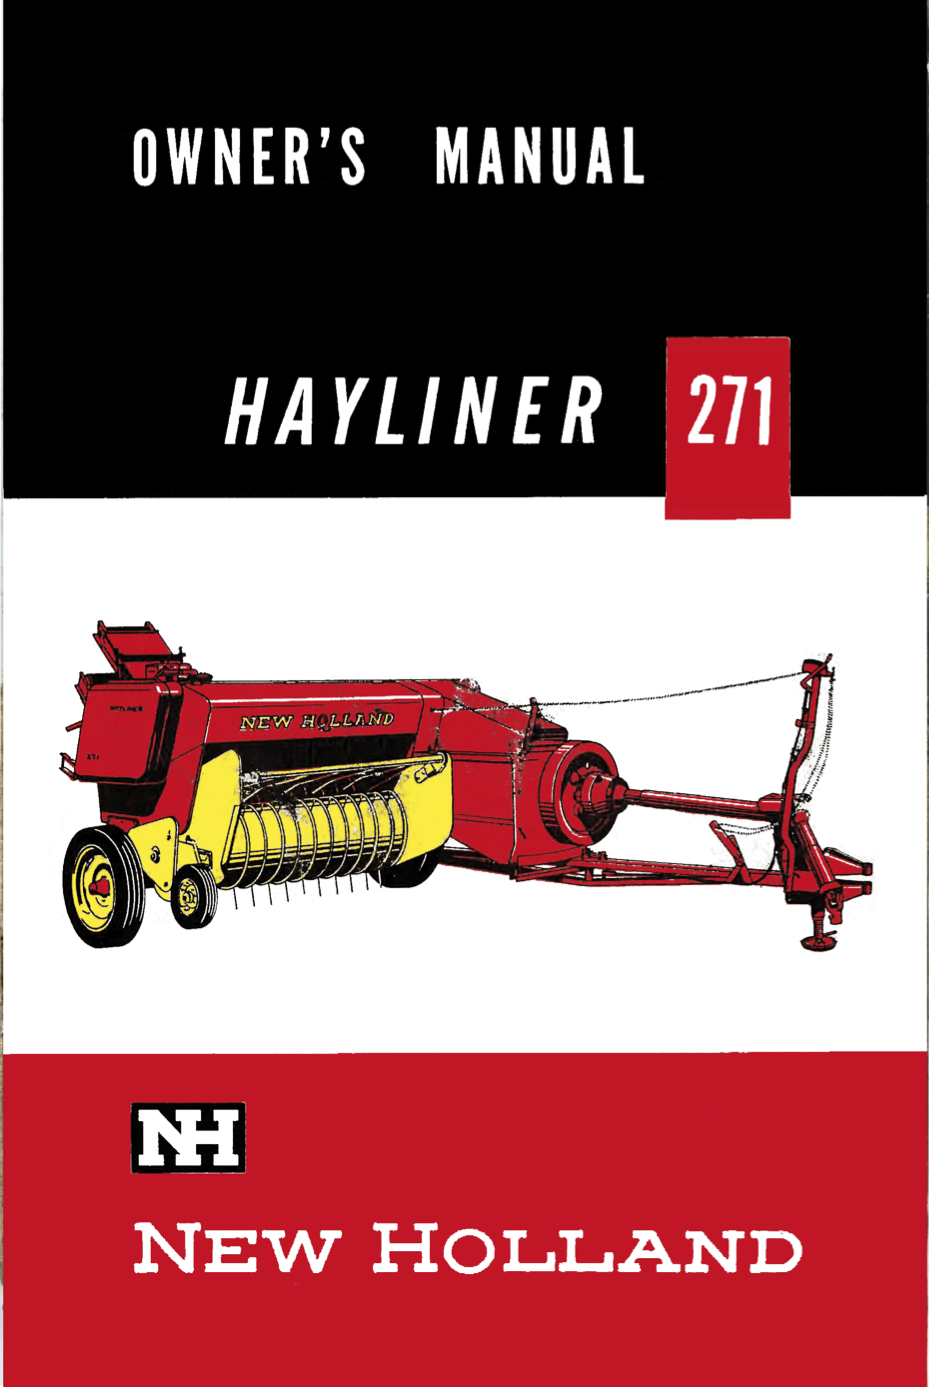 New Holland Hayliner 271 Baler - Owner's Manual - Ag Manuals - A Provider of Digital Farm Manuals - 1